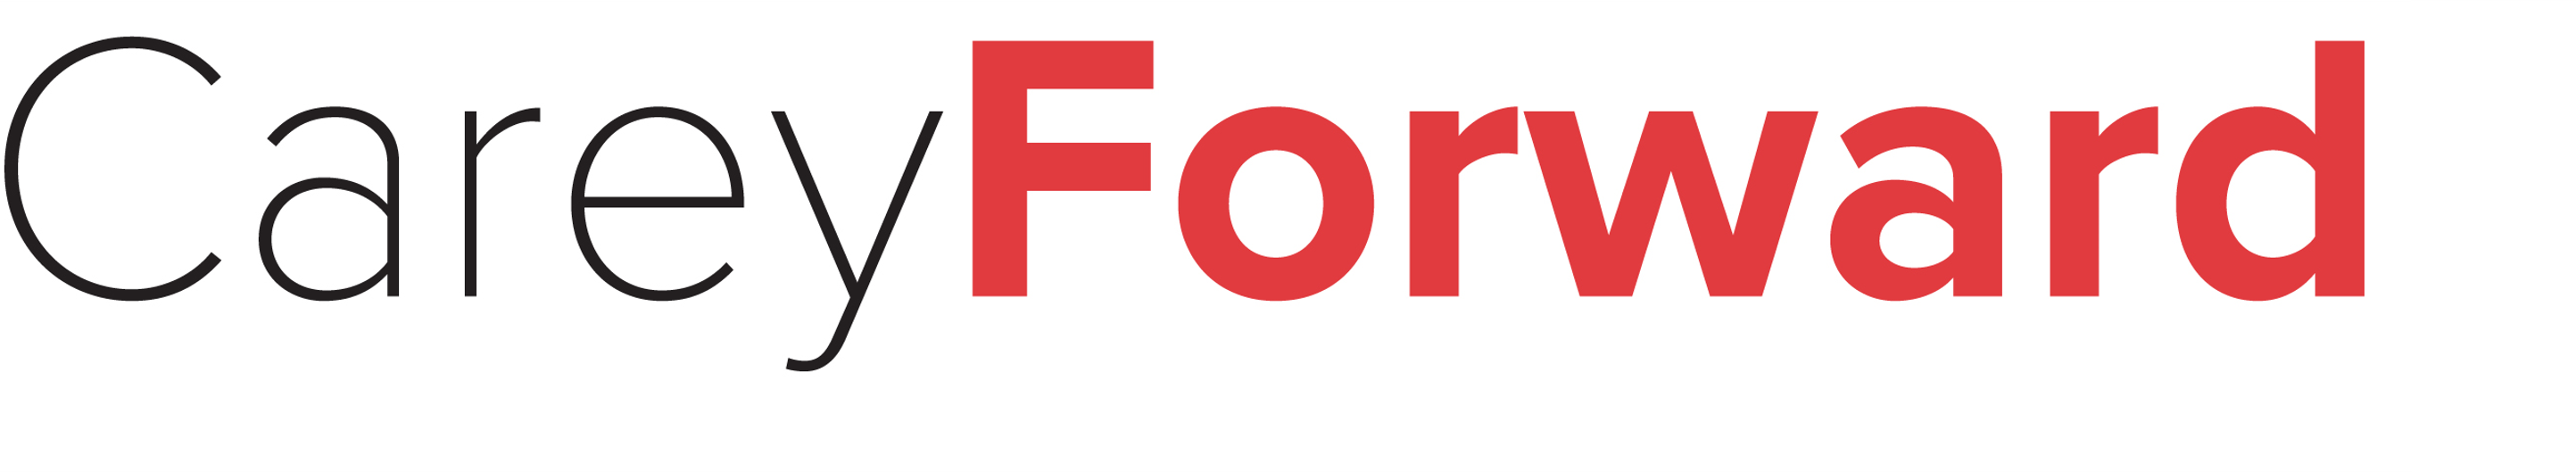 CareyForward logo